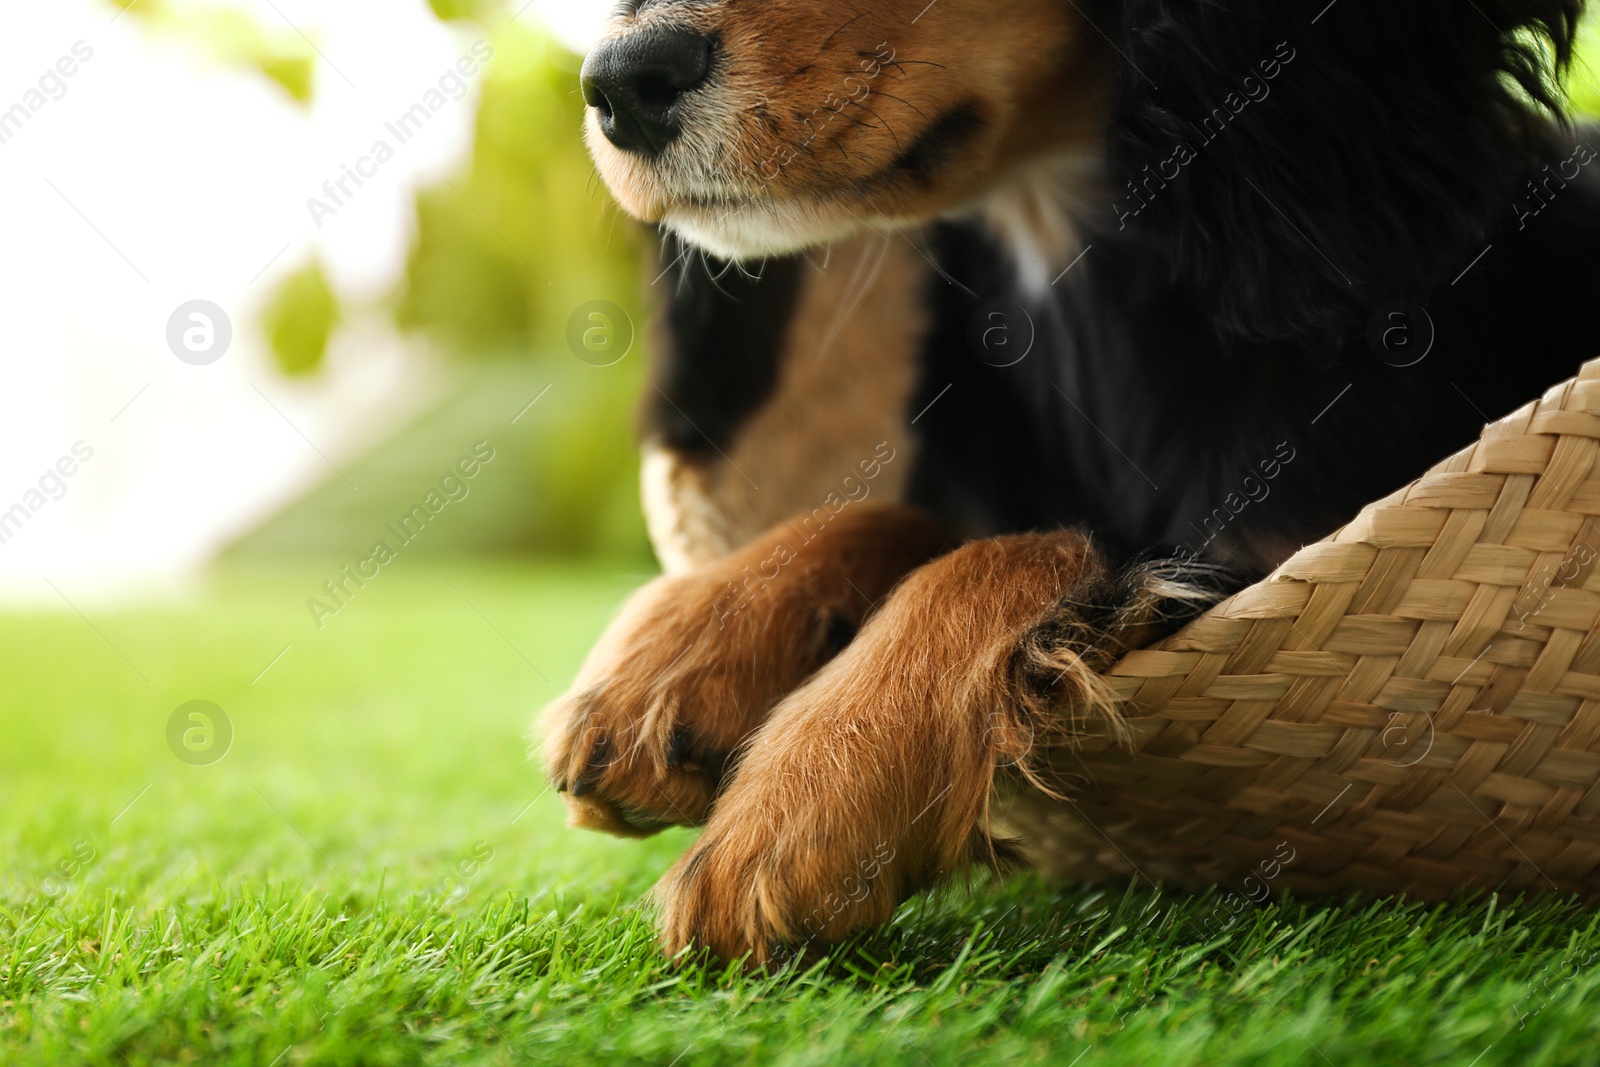 Photo of Cute dog relaxing in wicker basket on green grass outdoors, closeup. Friendly pet